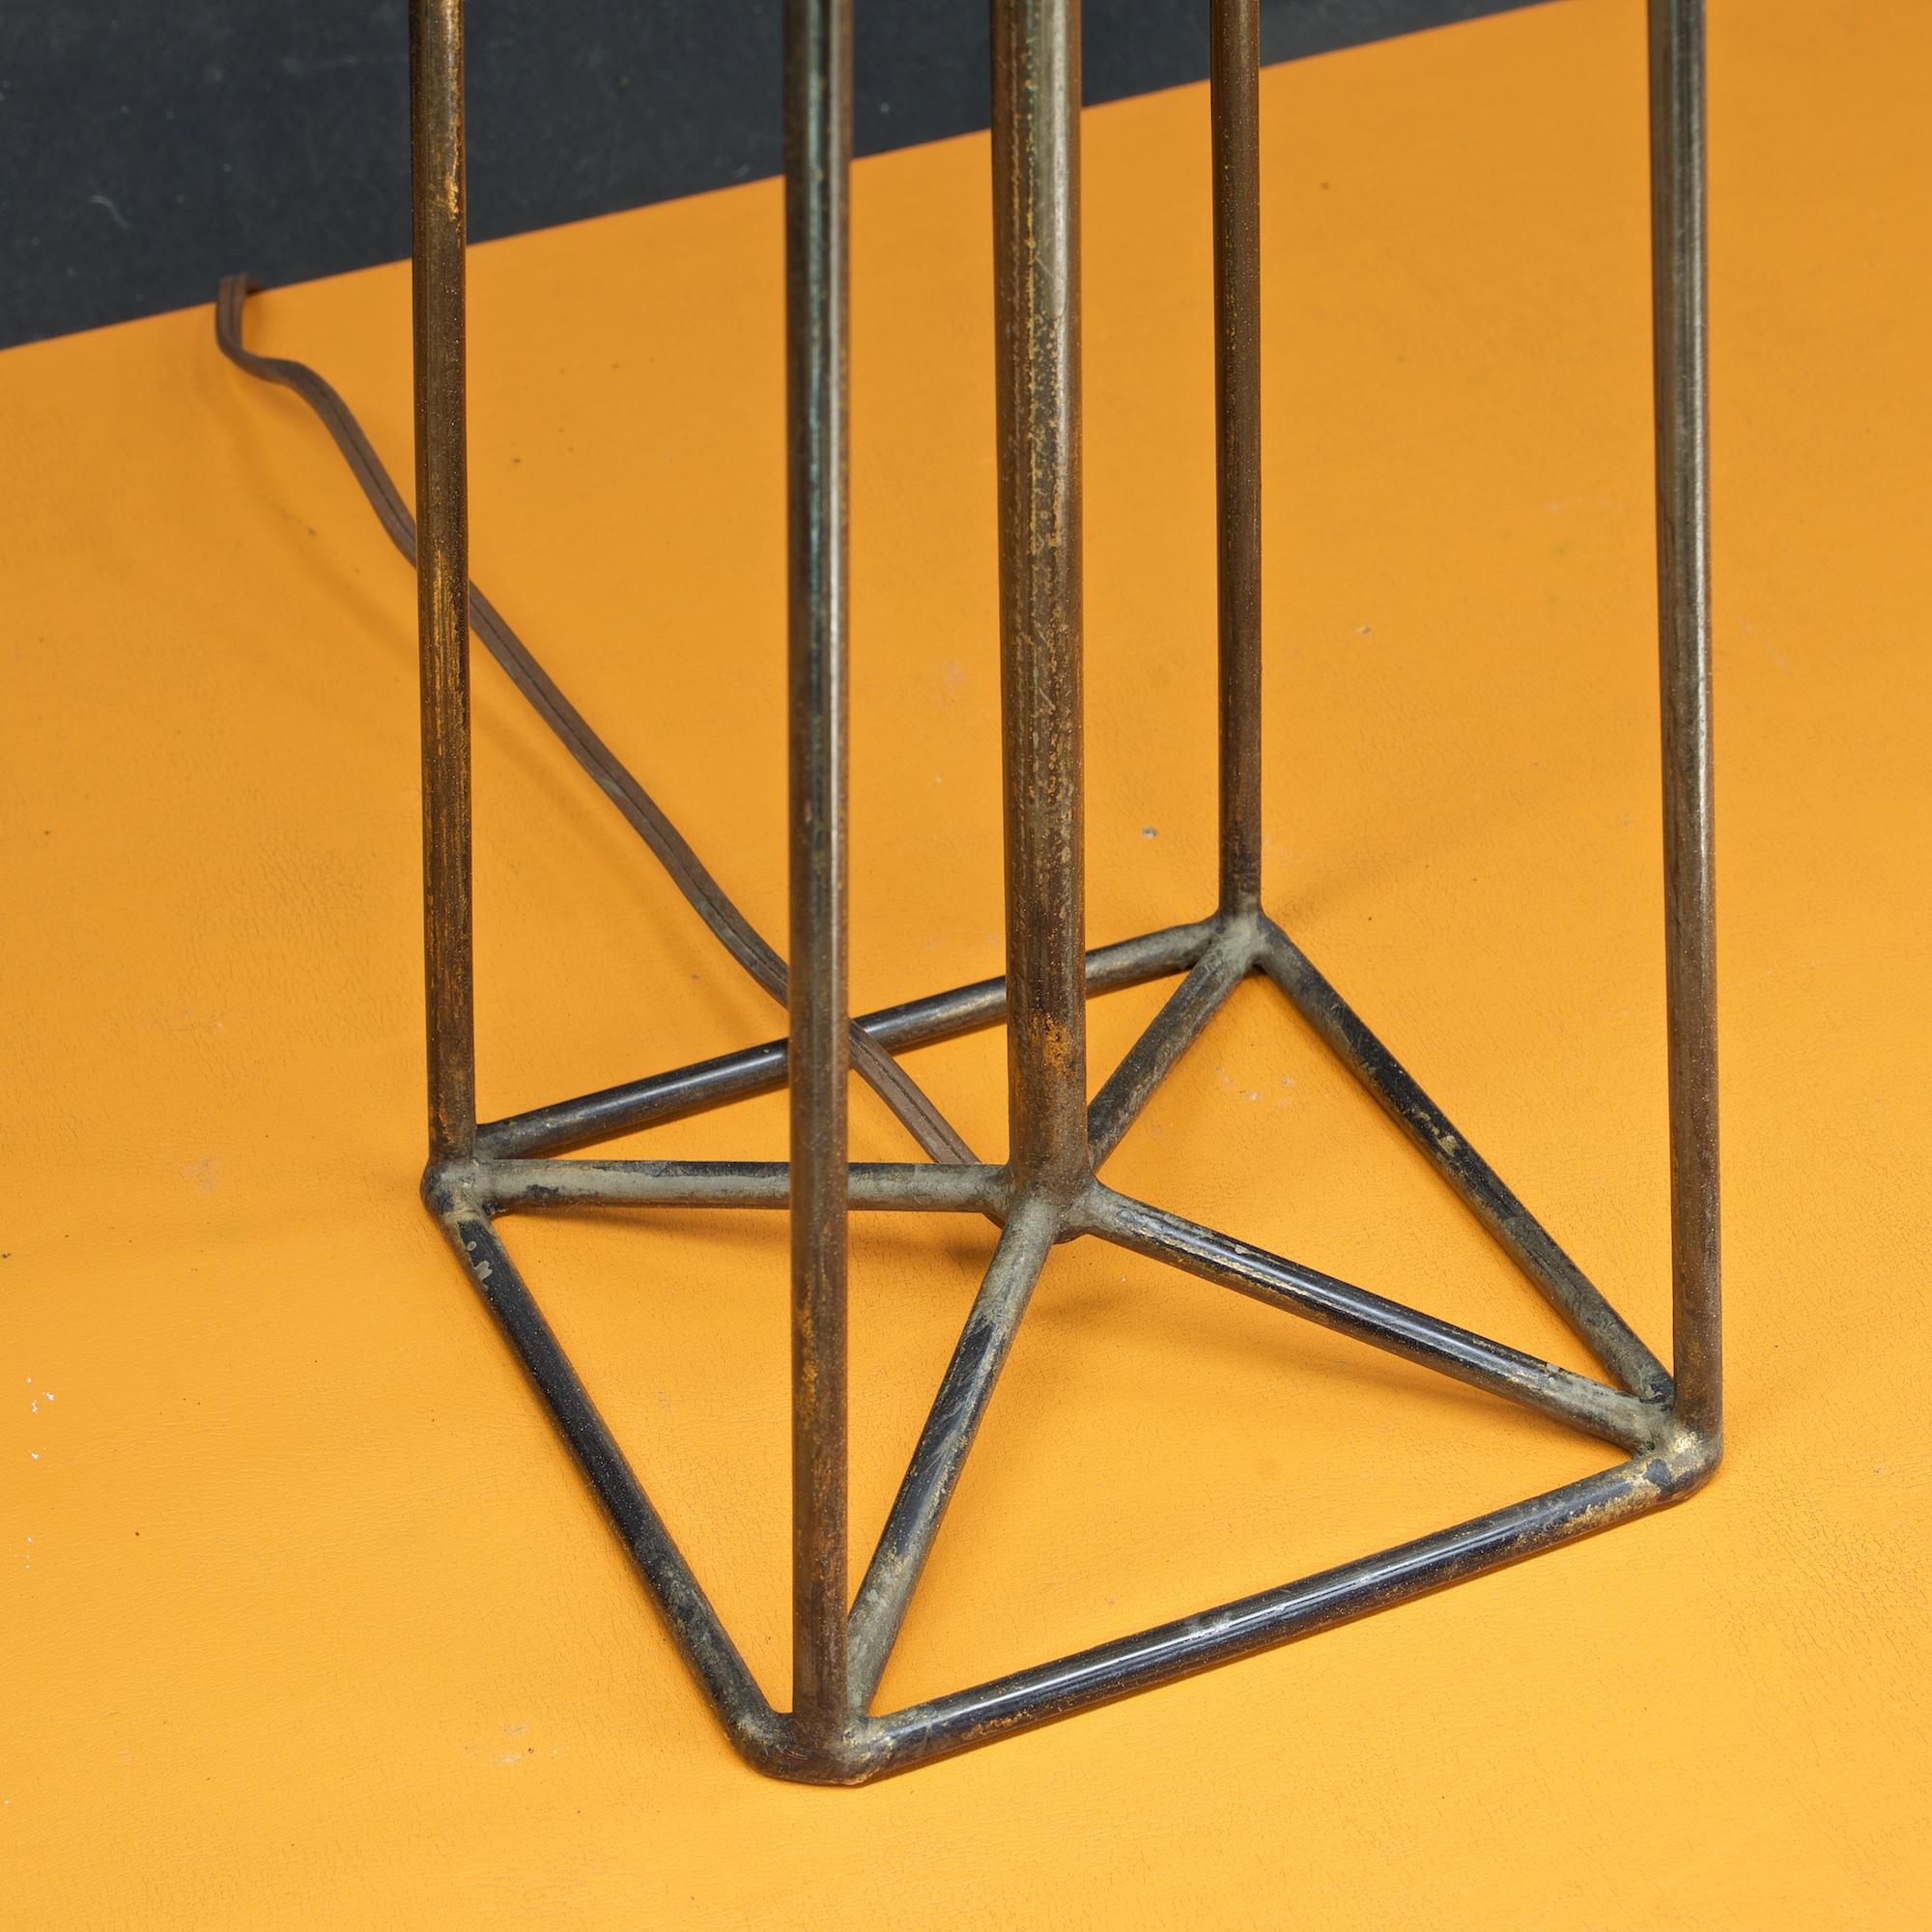 American Craftsman Harry Lawenda Iron Rod Box Table Lamp Kneedler-Fauchere 1950s Mid-Century Modern